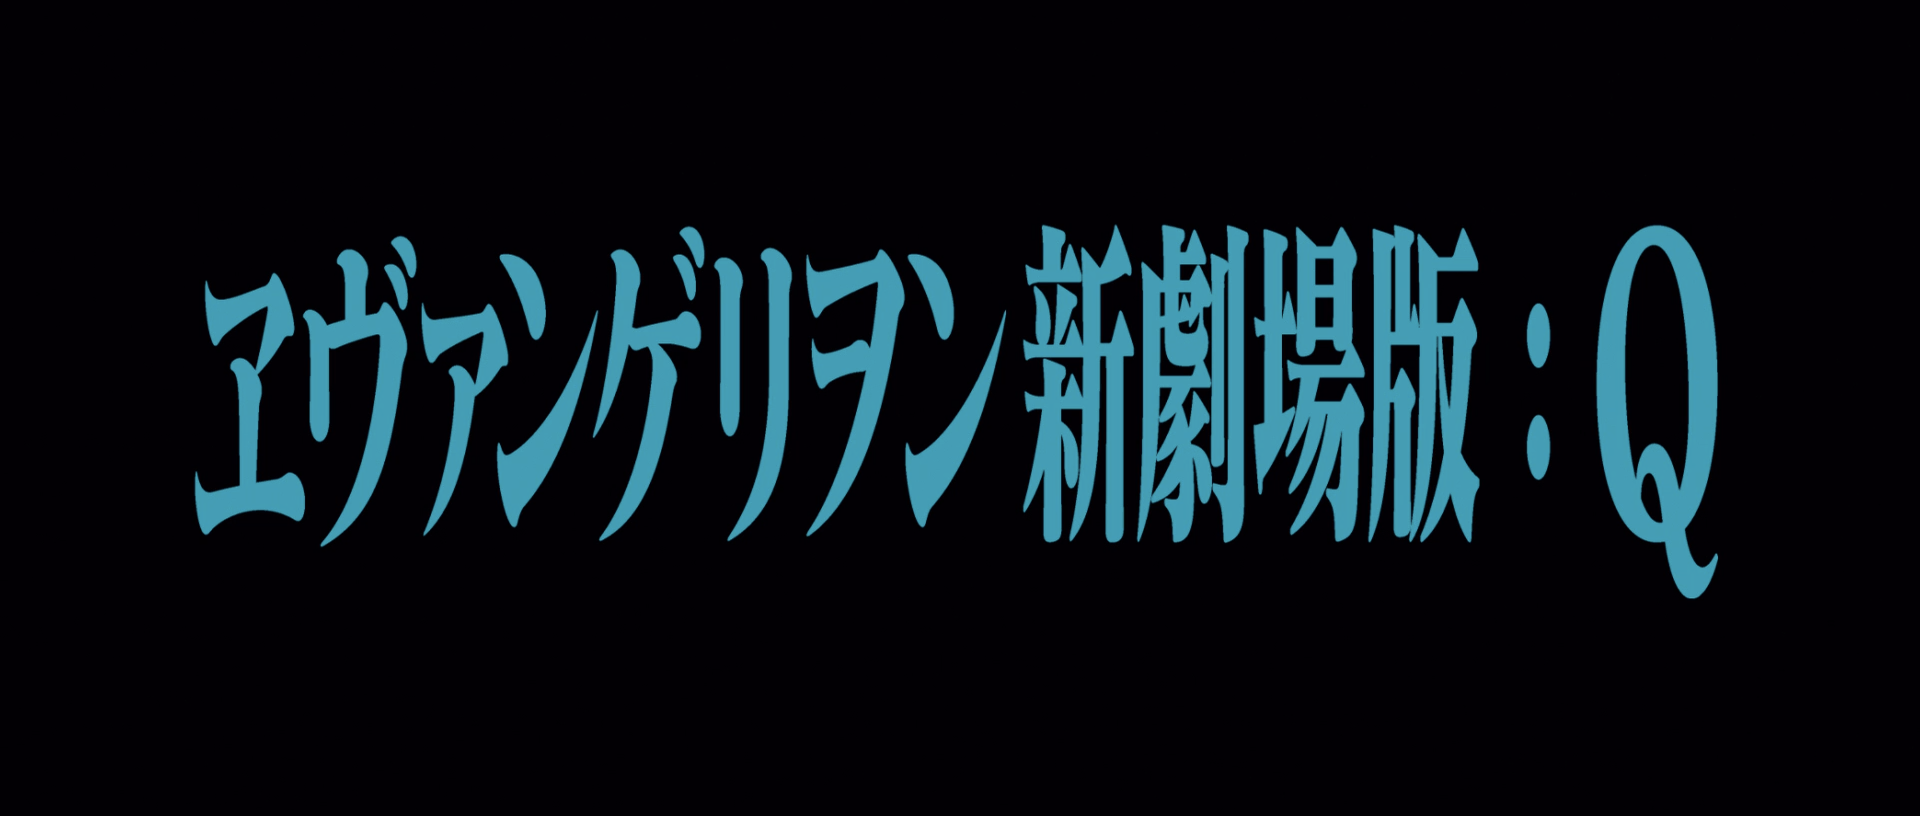 Neon Genesis Evangelion - Fonts In Use.